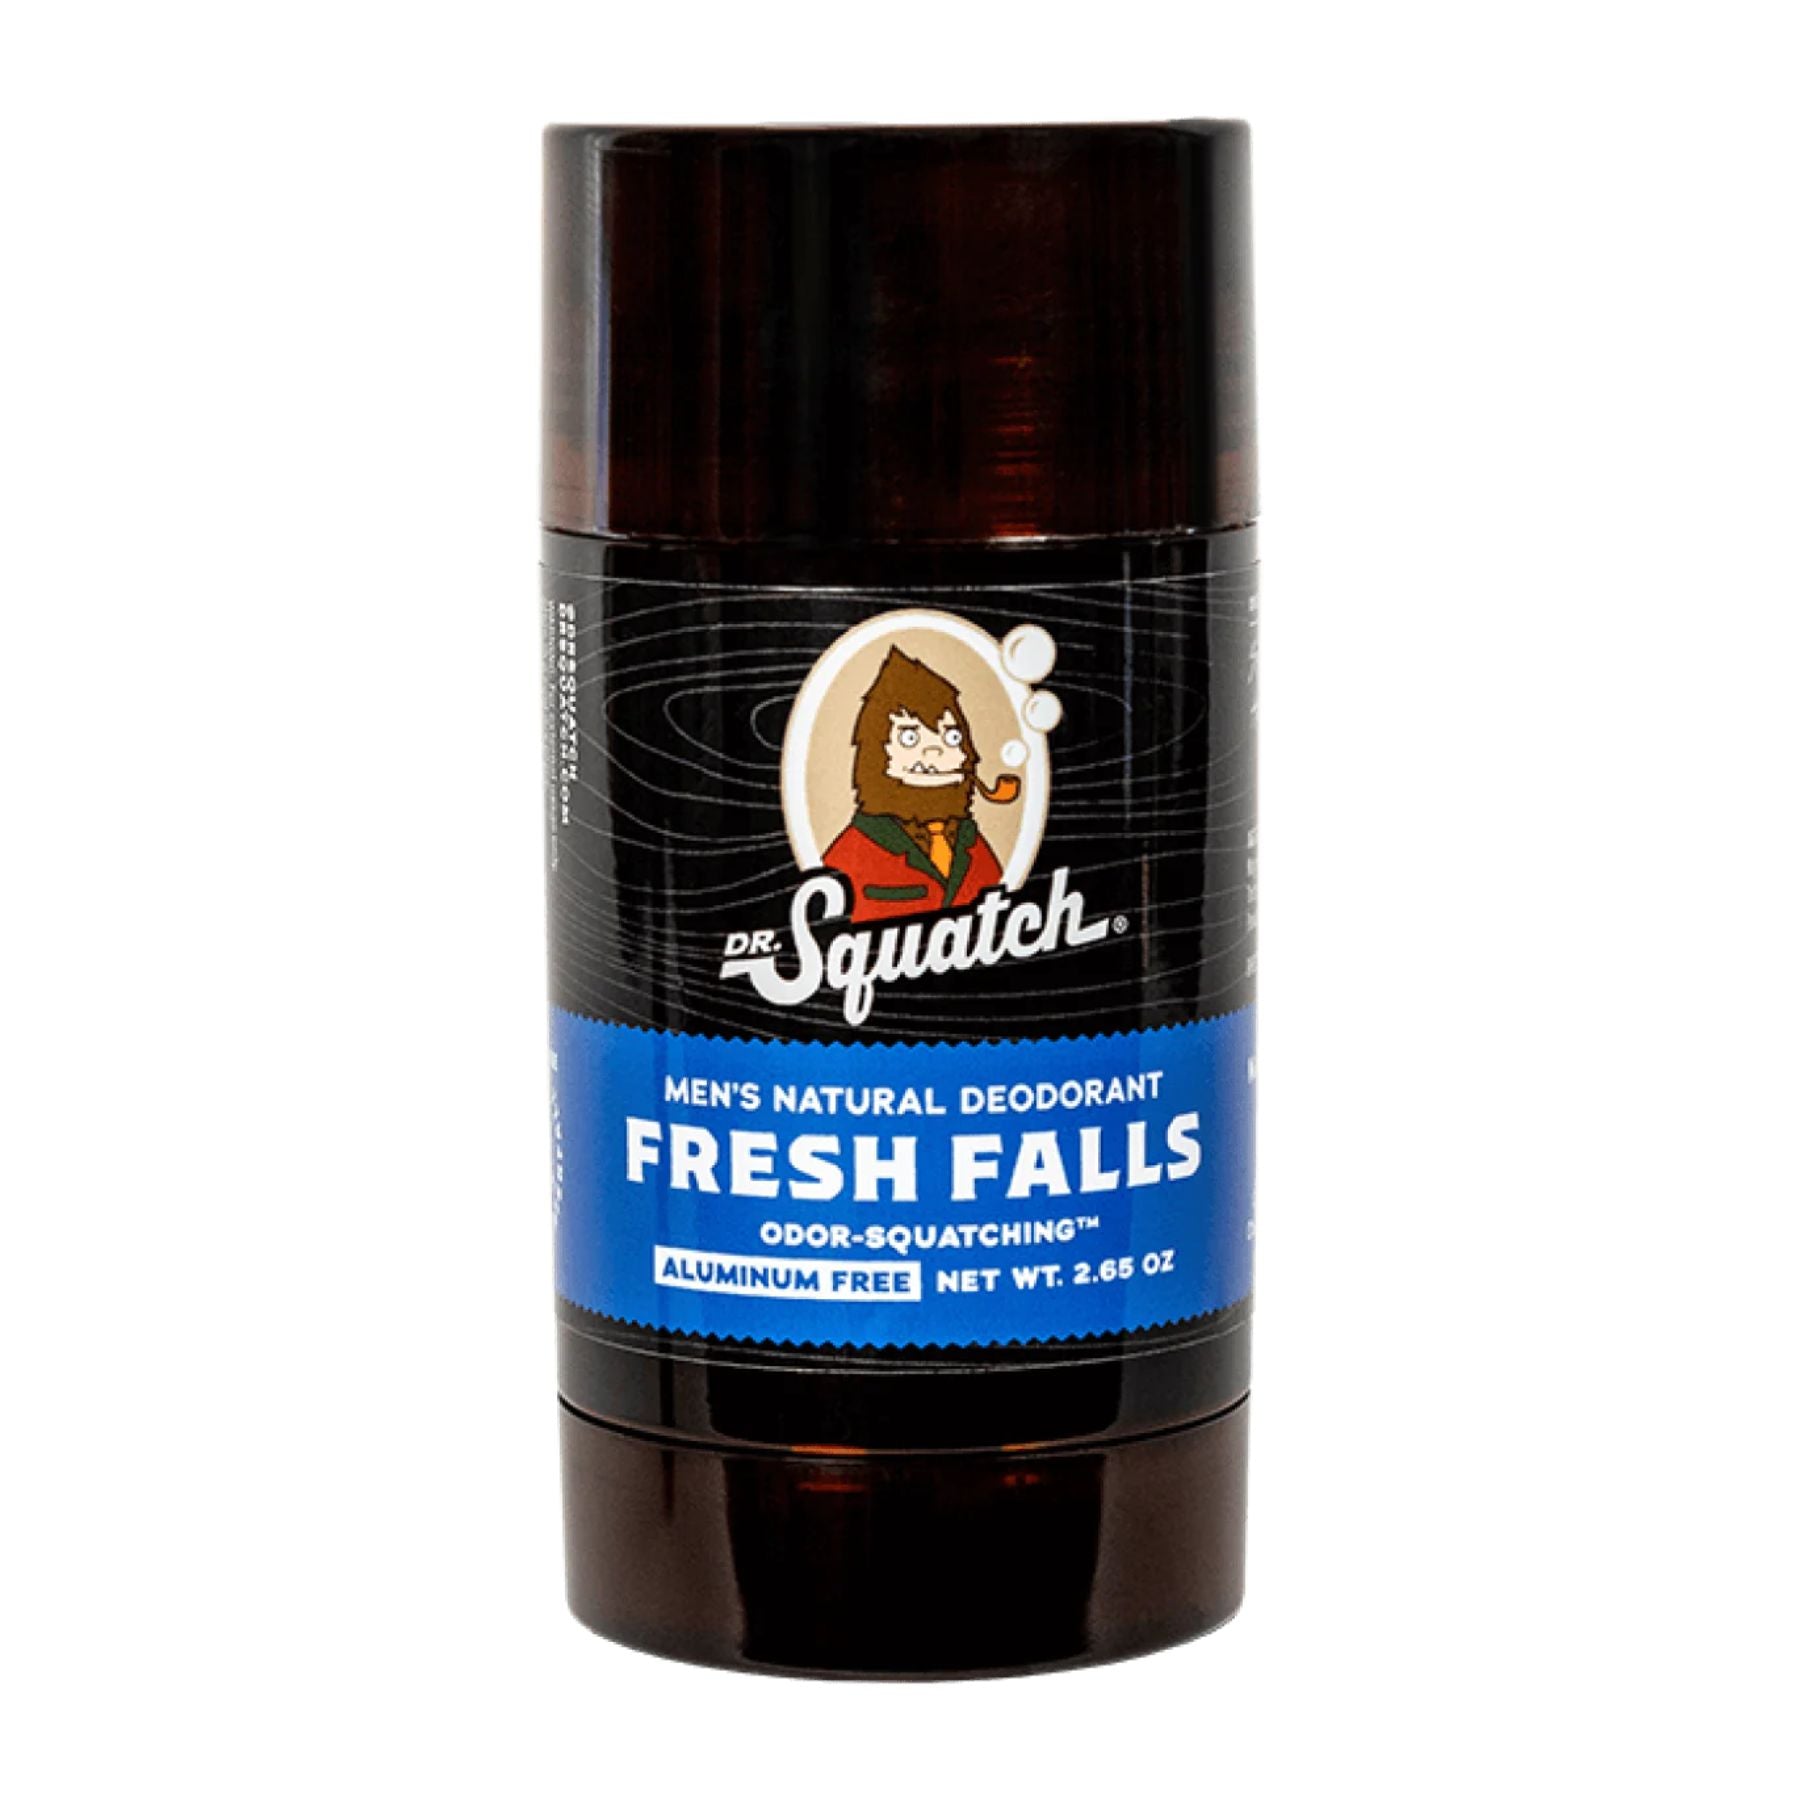 Dr. Squatch Men's Deodorant Fresh Falls 75g